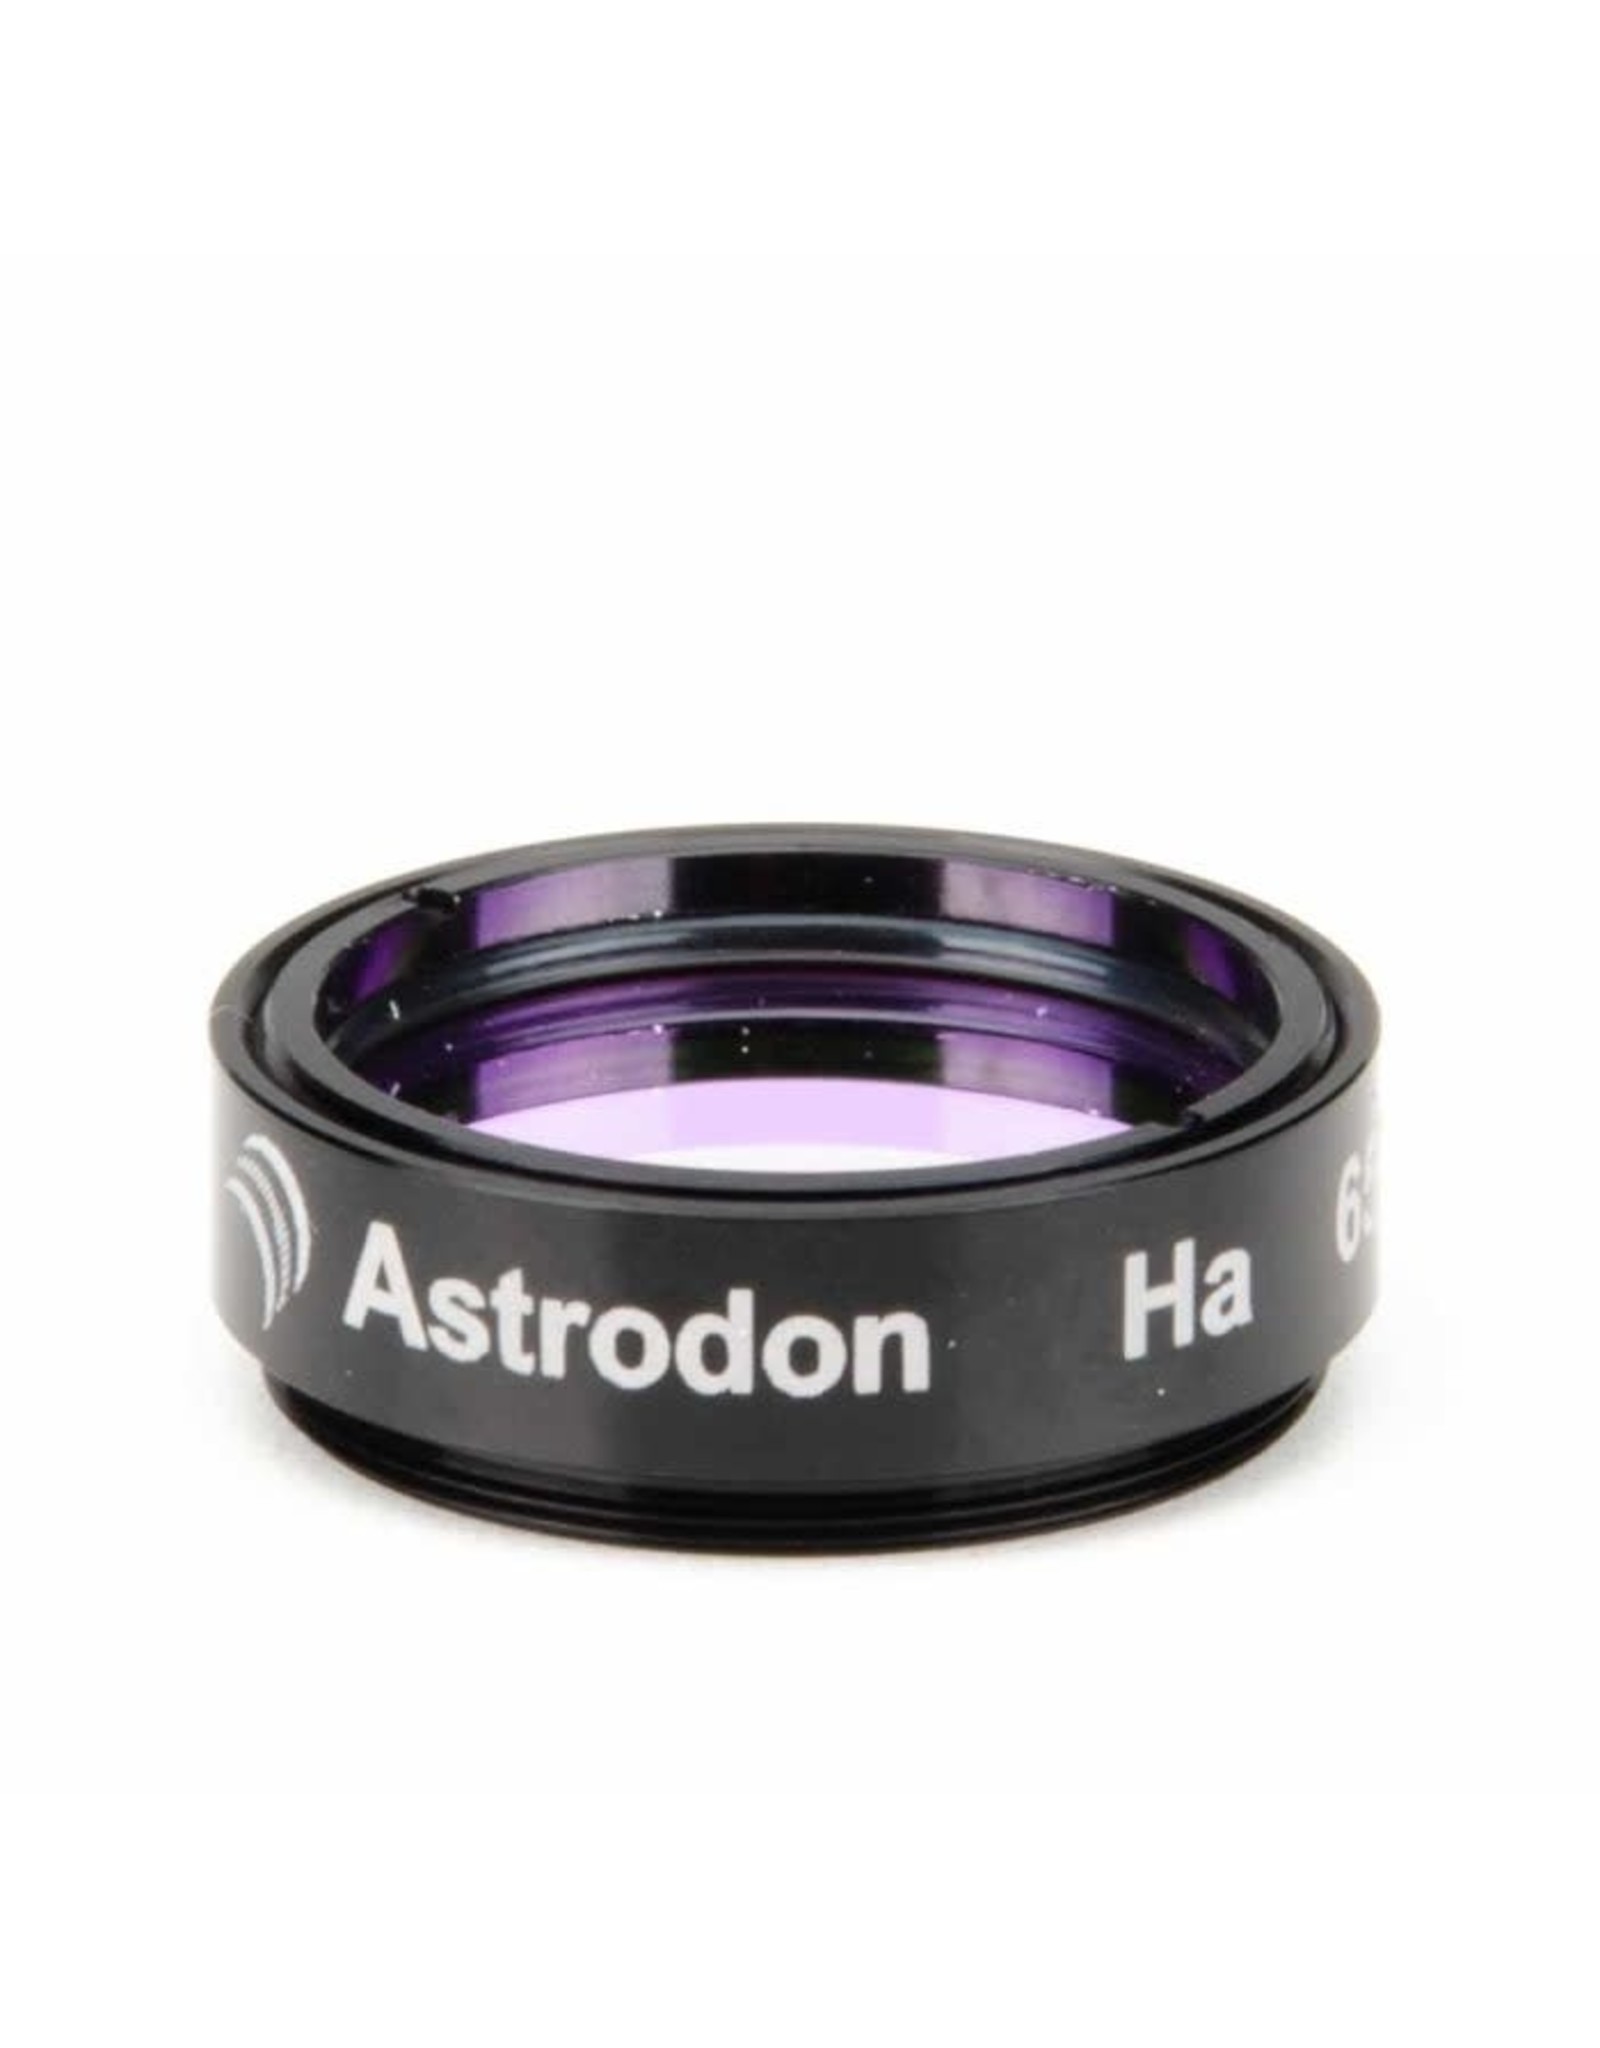 Astrodon Astrodon 3 nm Narrowband H-alpha Filter